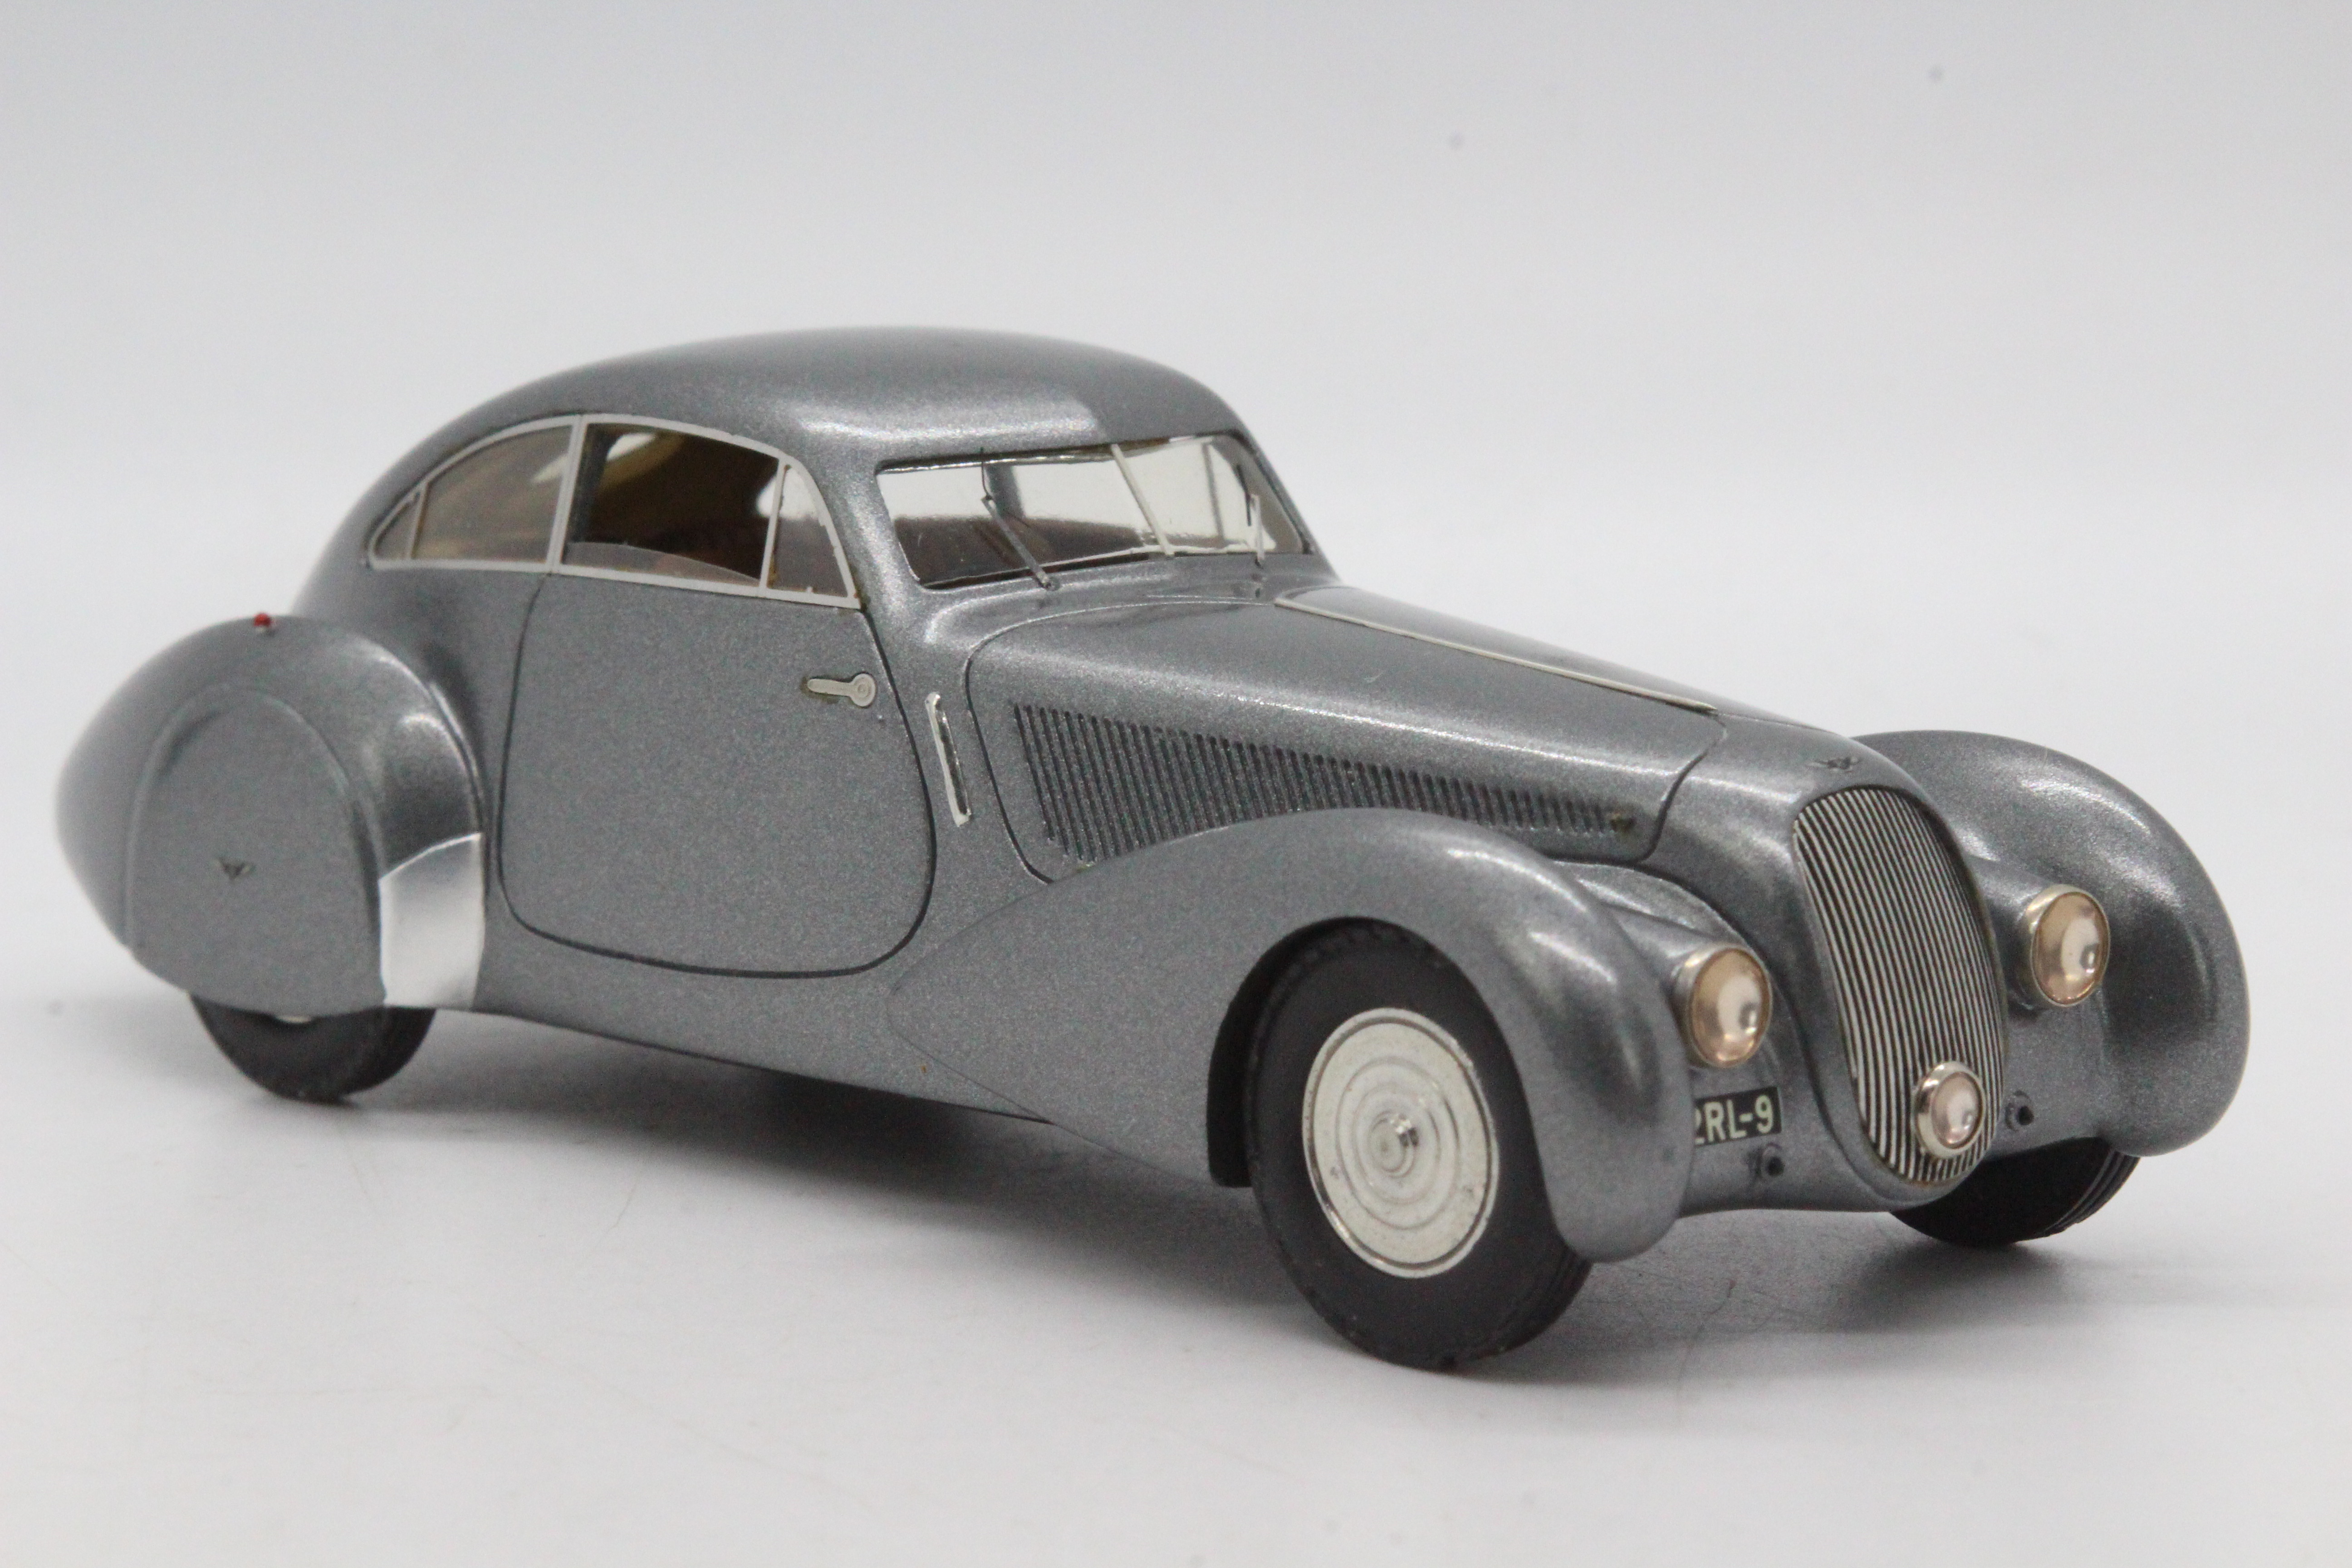 MPH Models, Tim Dyke - A boxed MPH Models #956 Bentley 'Embiricos' 1938 Road Car. - Image 5 of 9